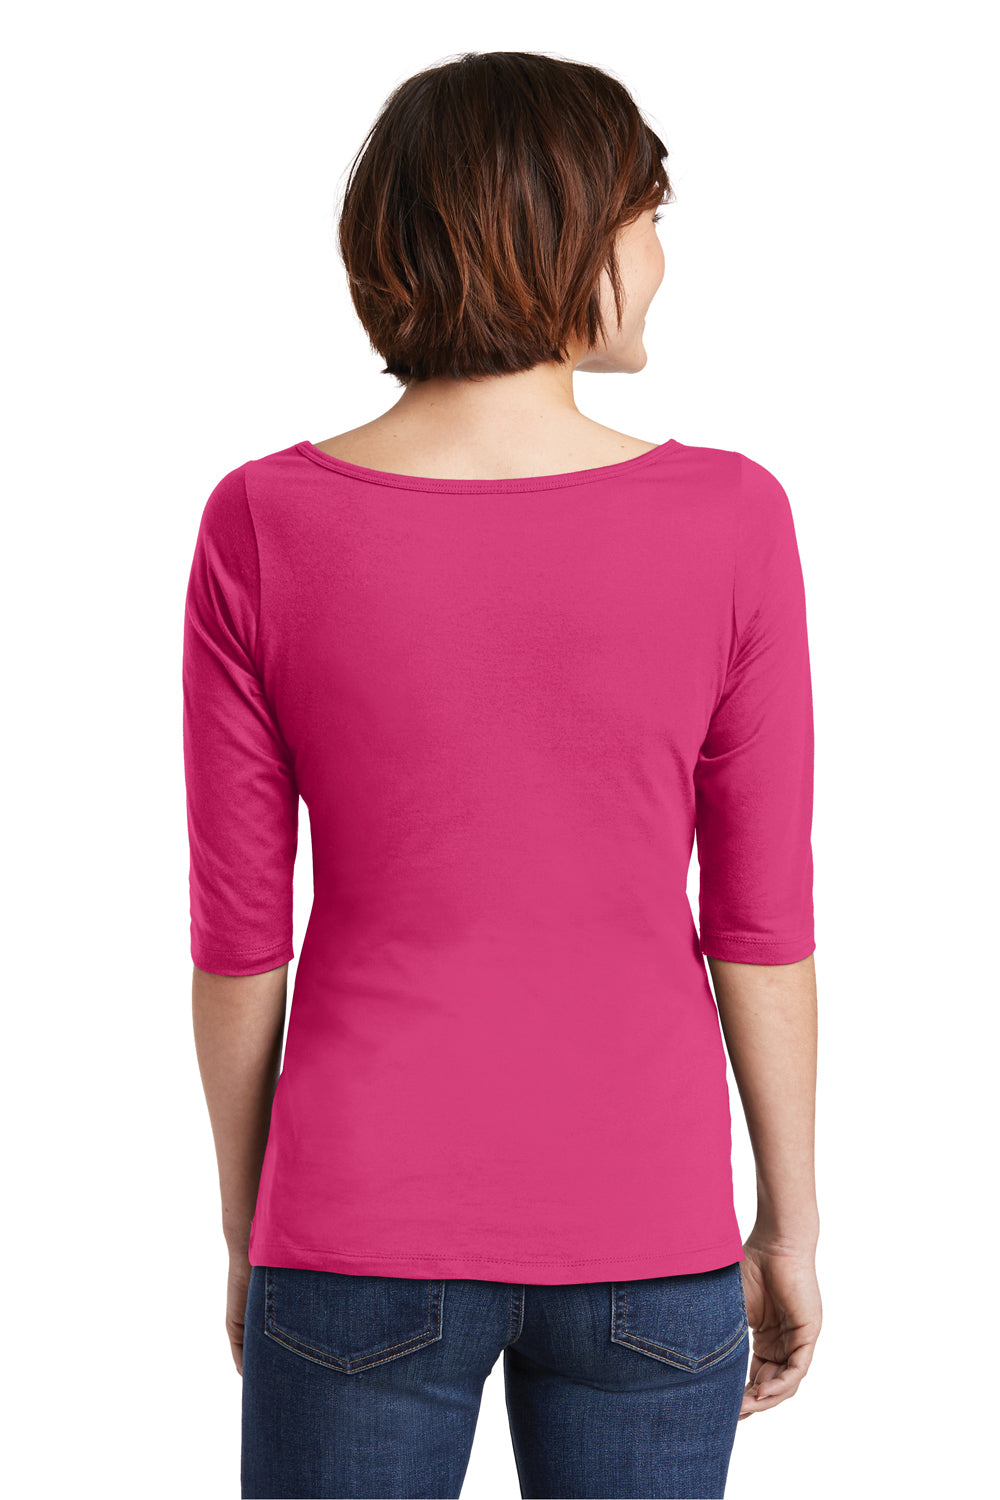 District DM107L Womens Perfect Weight 3/4 Sleeve T-Shirt Fuchsia Pink Back